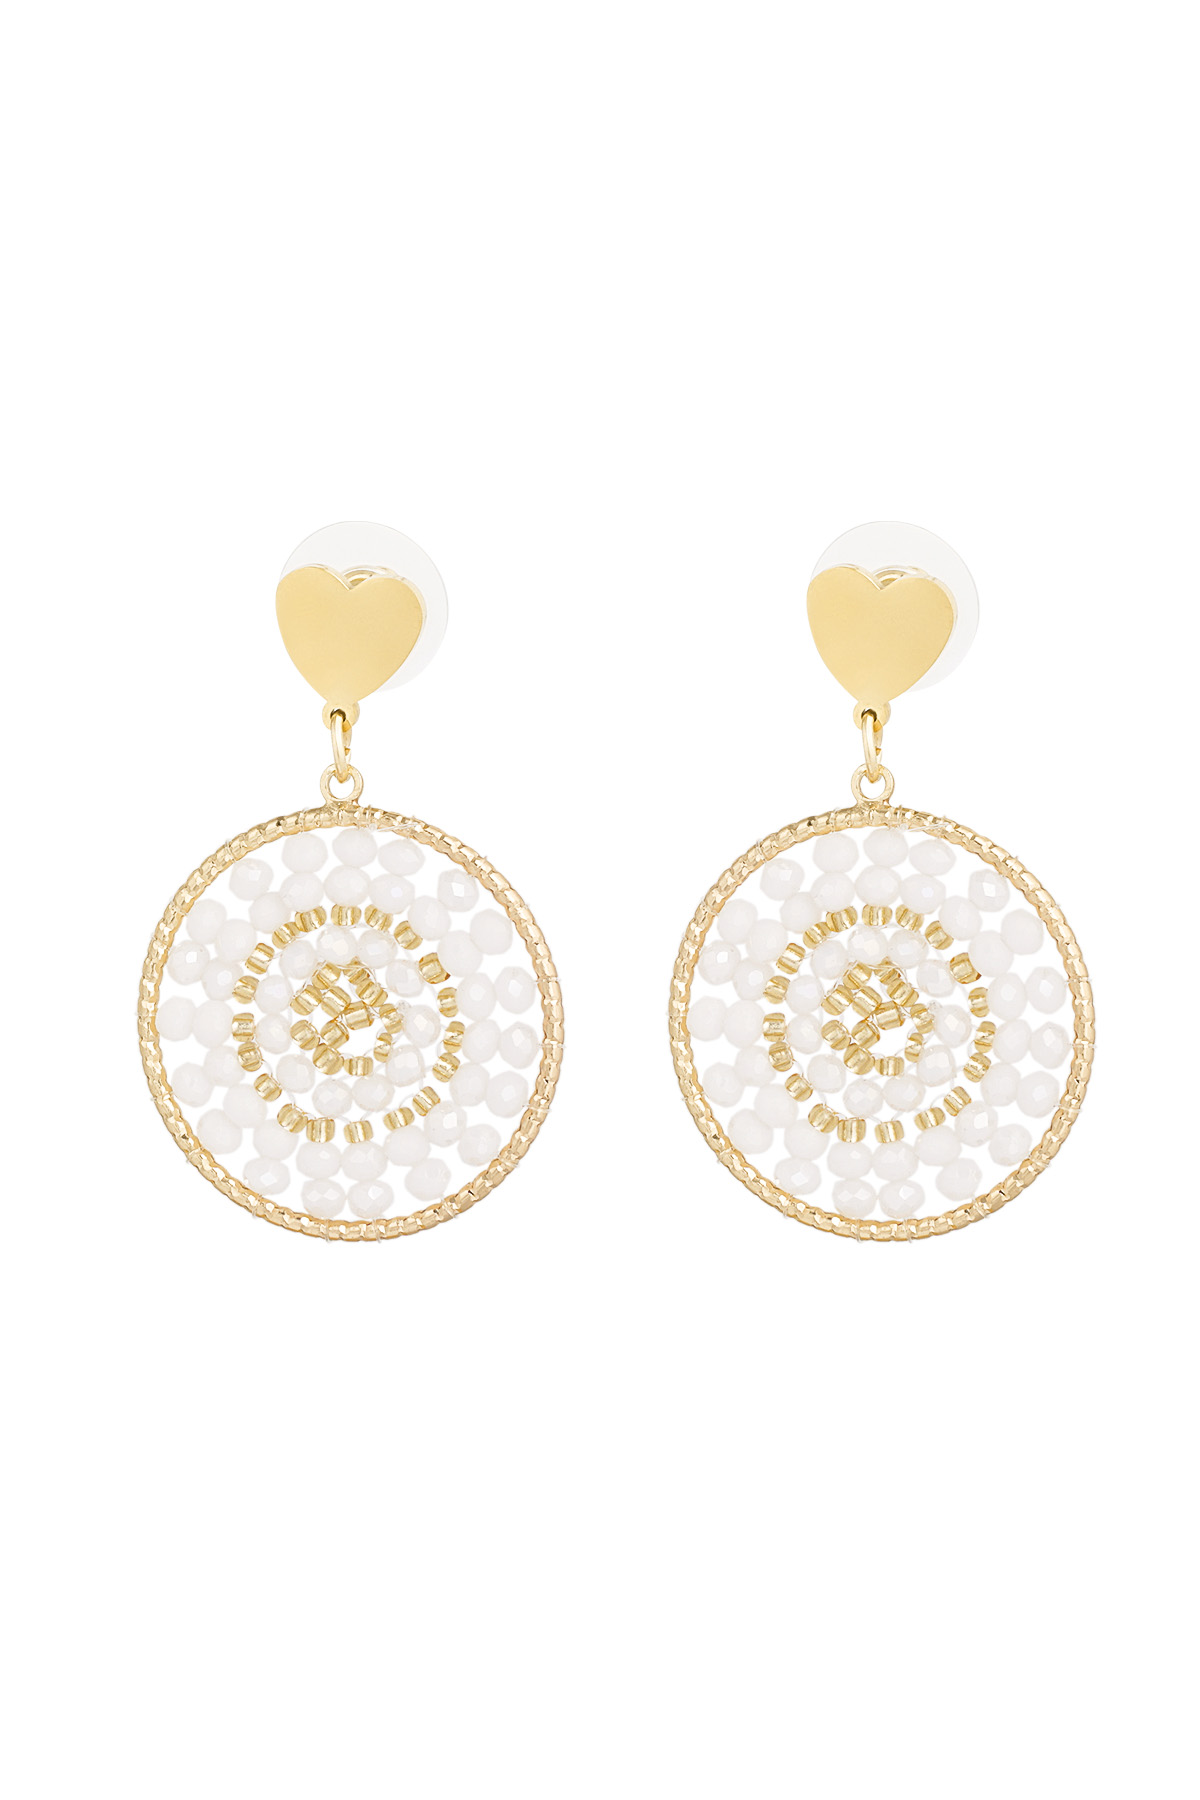 Mandala earrings with heart - white gold  h5 